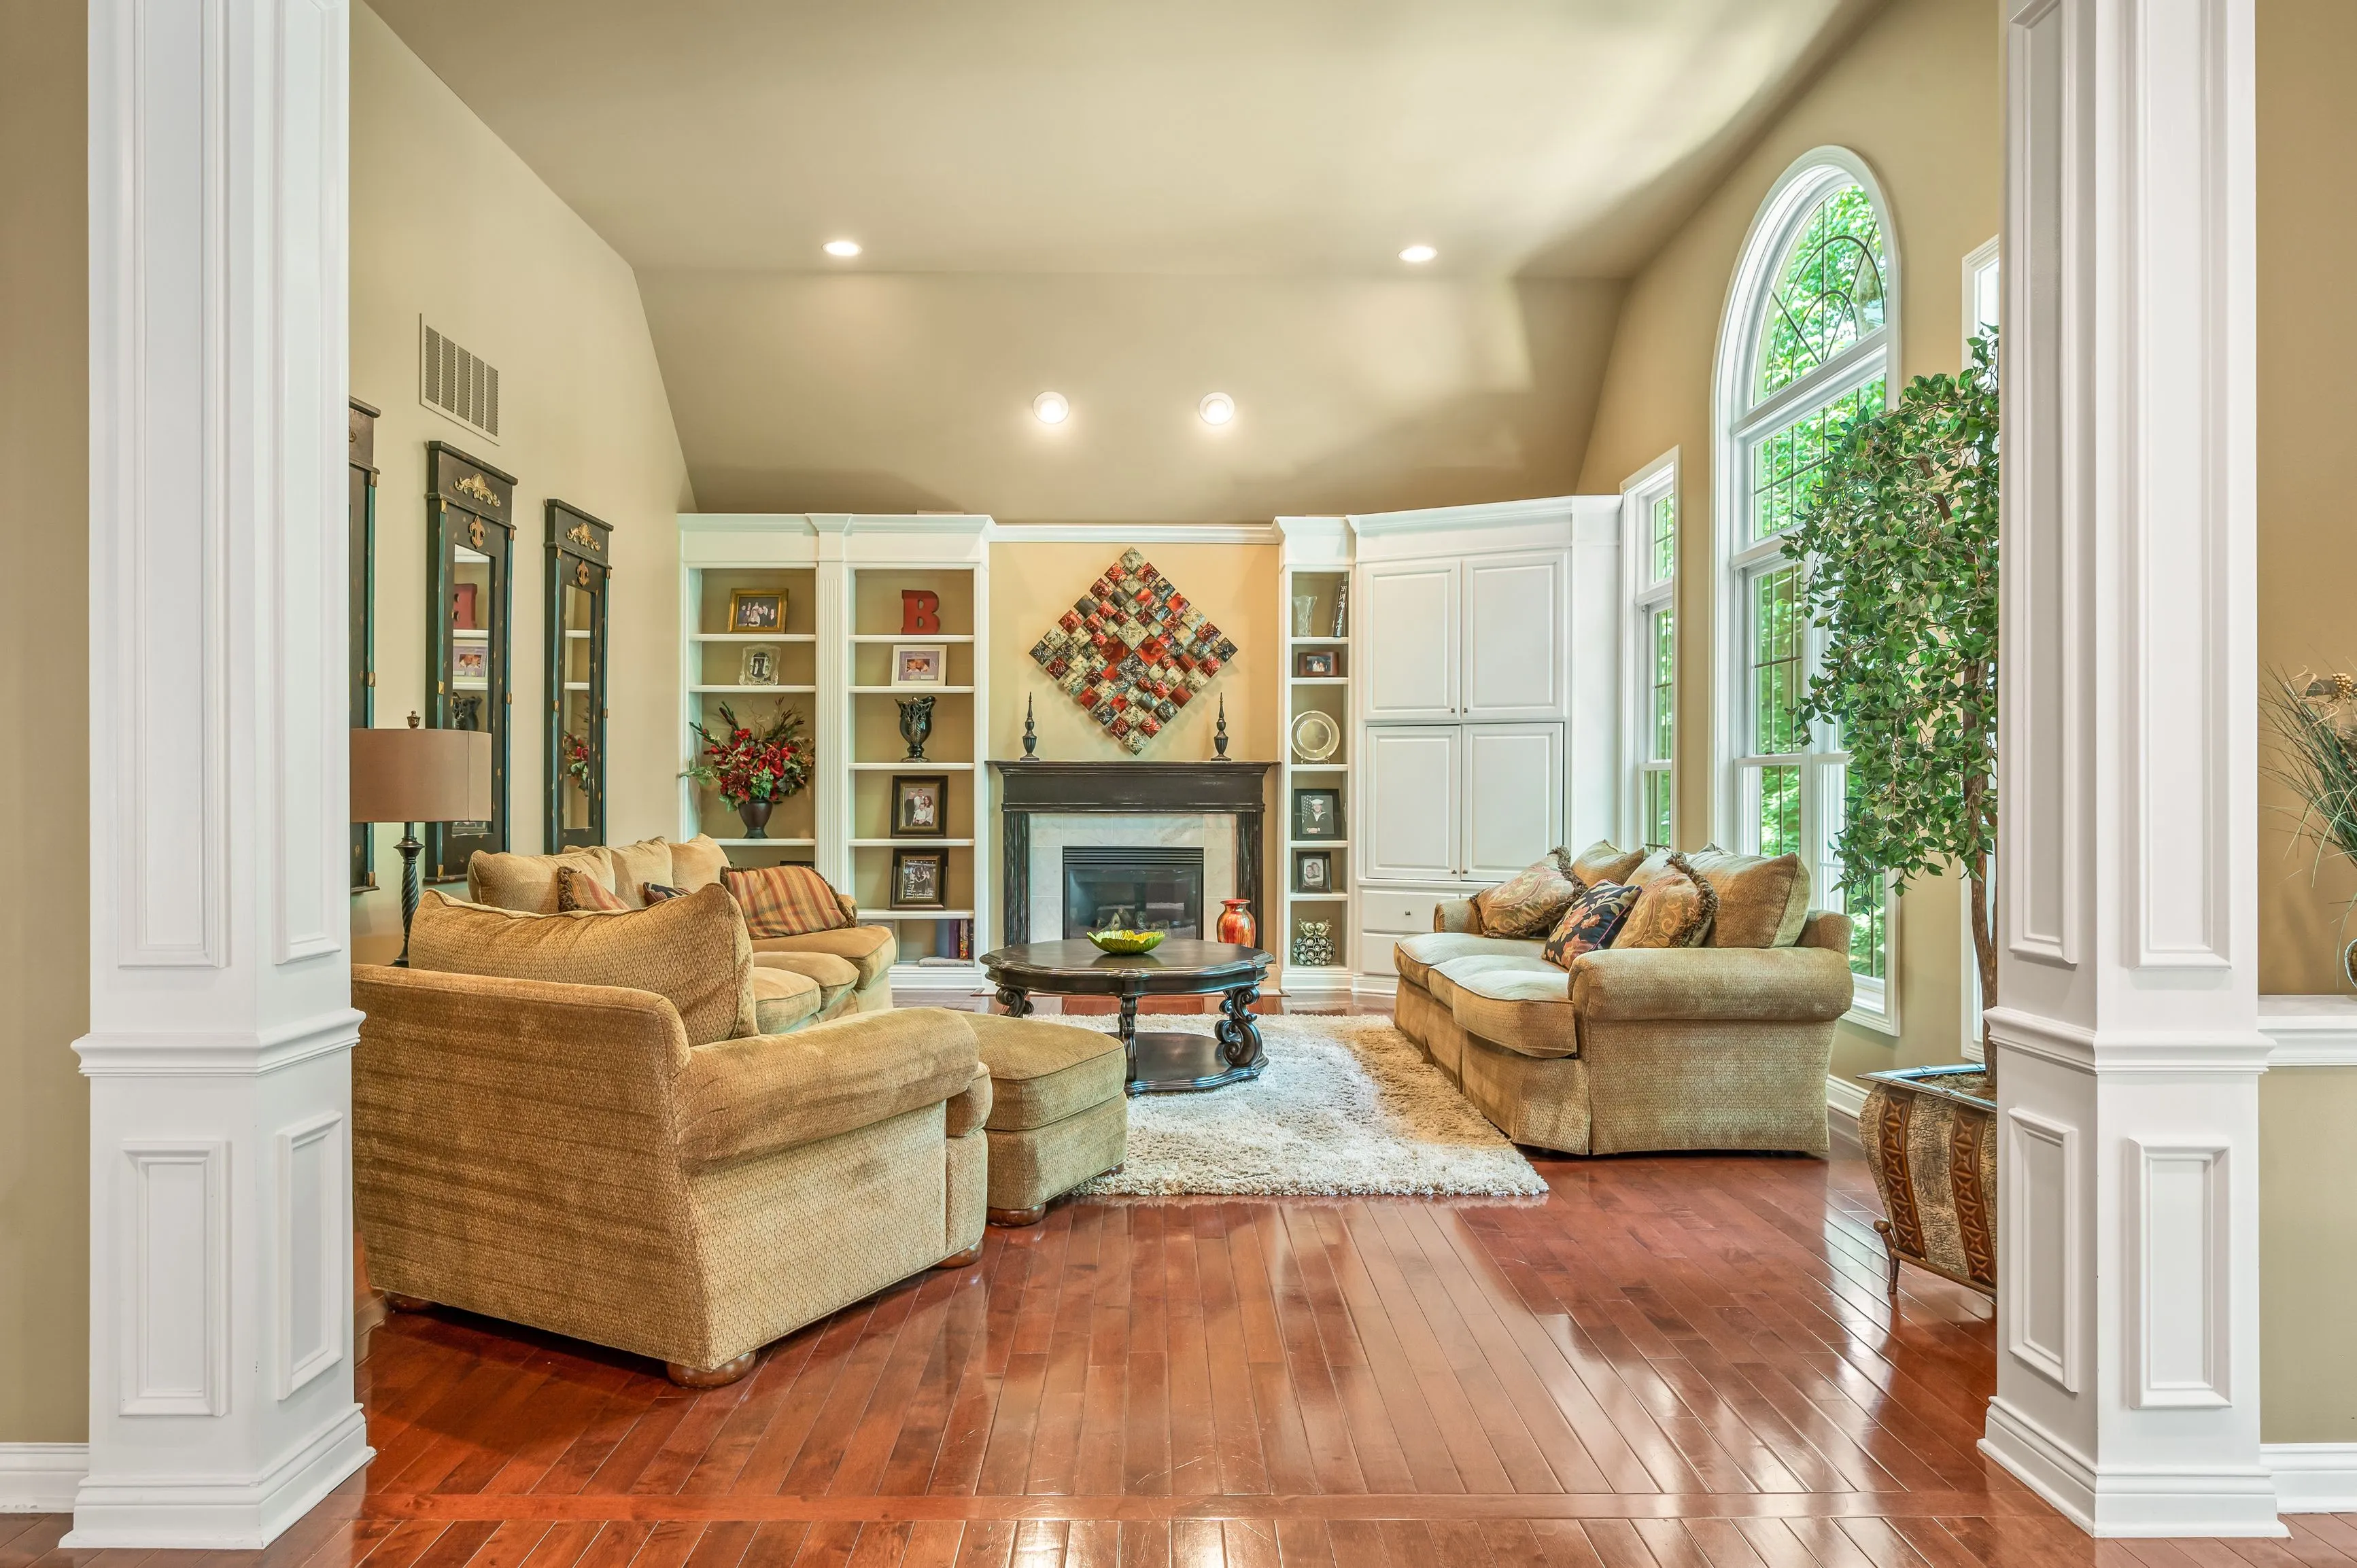 Elegant living room with polished hardwood floors, white columns, fireplace, large windows, and comfortable furniture.